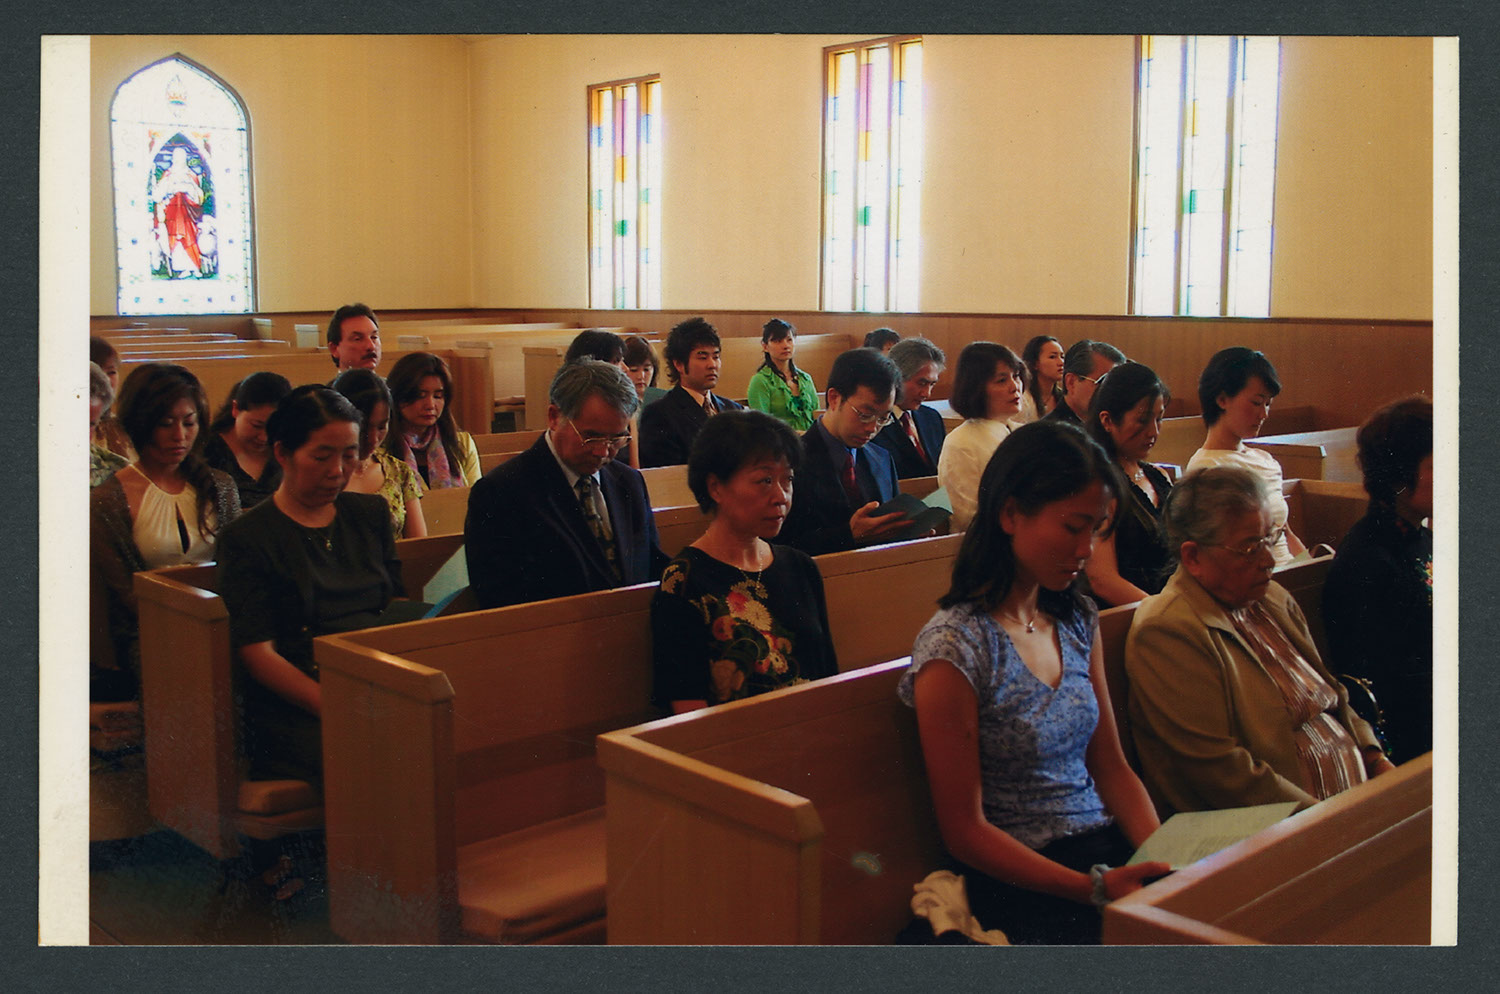 The congregation at worship